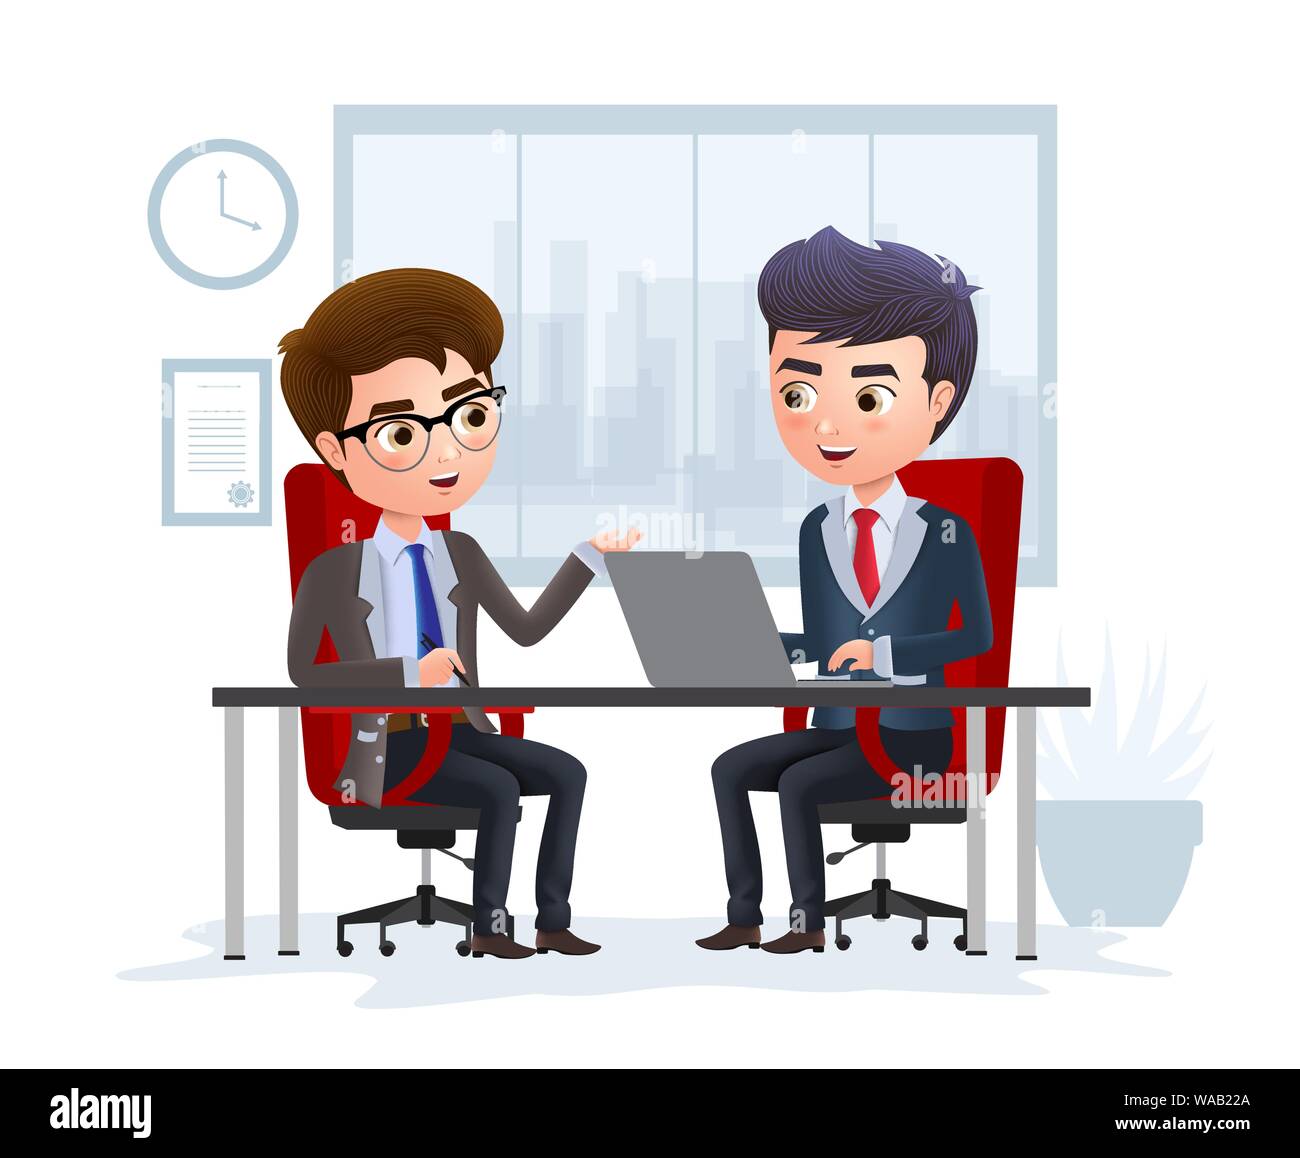 Business Job Interview vektor Konzept. Business Charakter manager Job Interview auf Antragsteller für Büro Beschäftigung Stelle positionieren. Stock Vektor